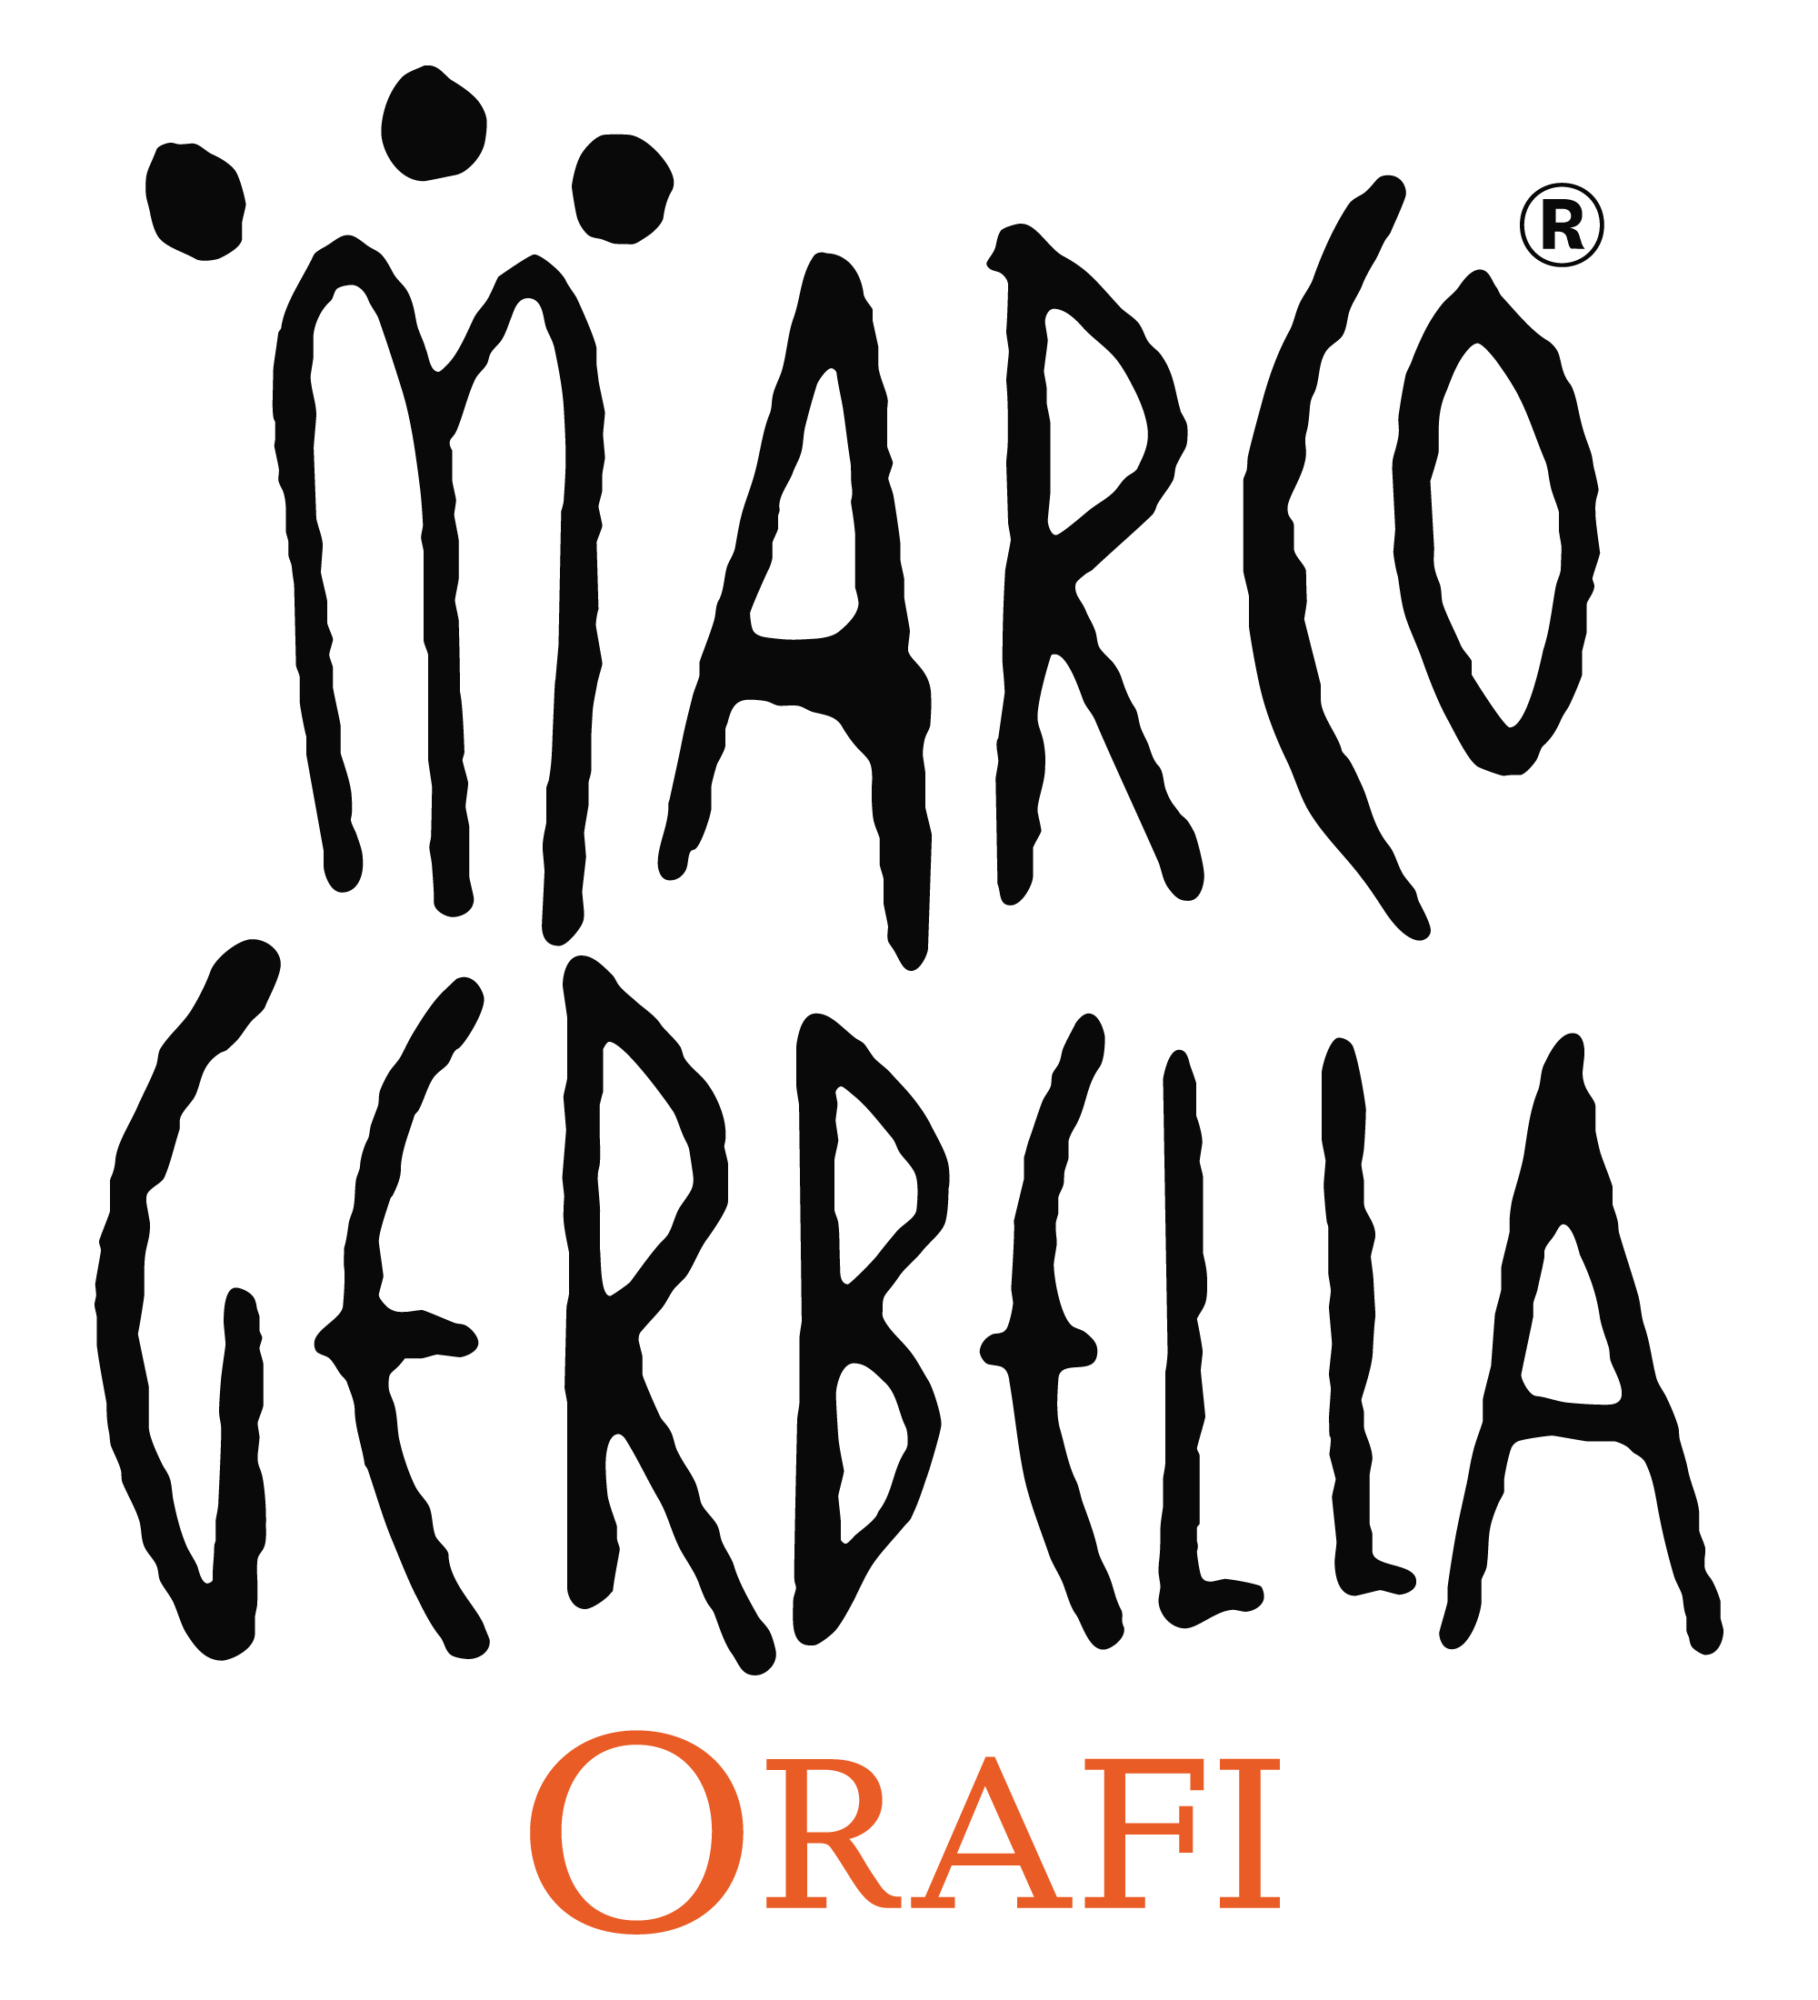 Marco Gerbella Orafi